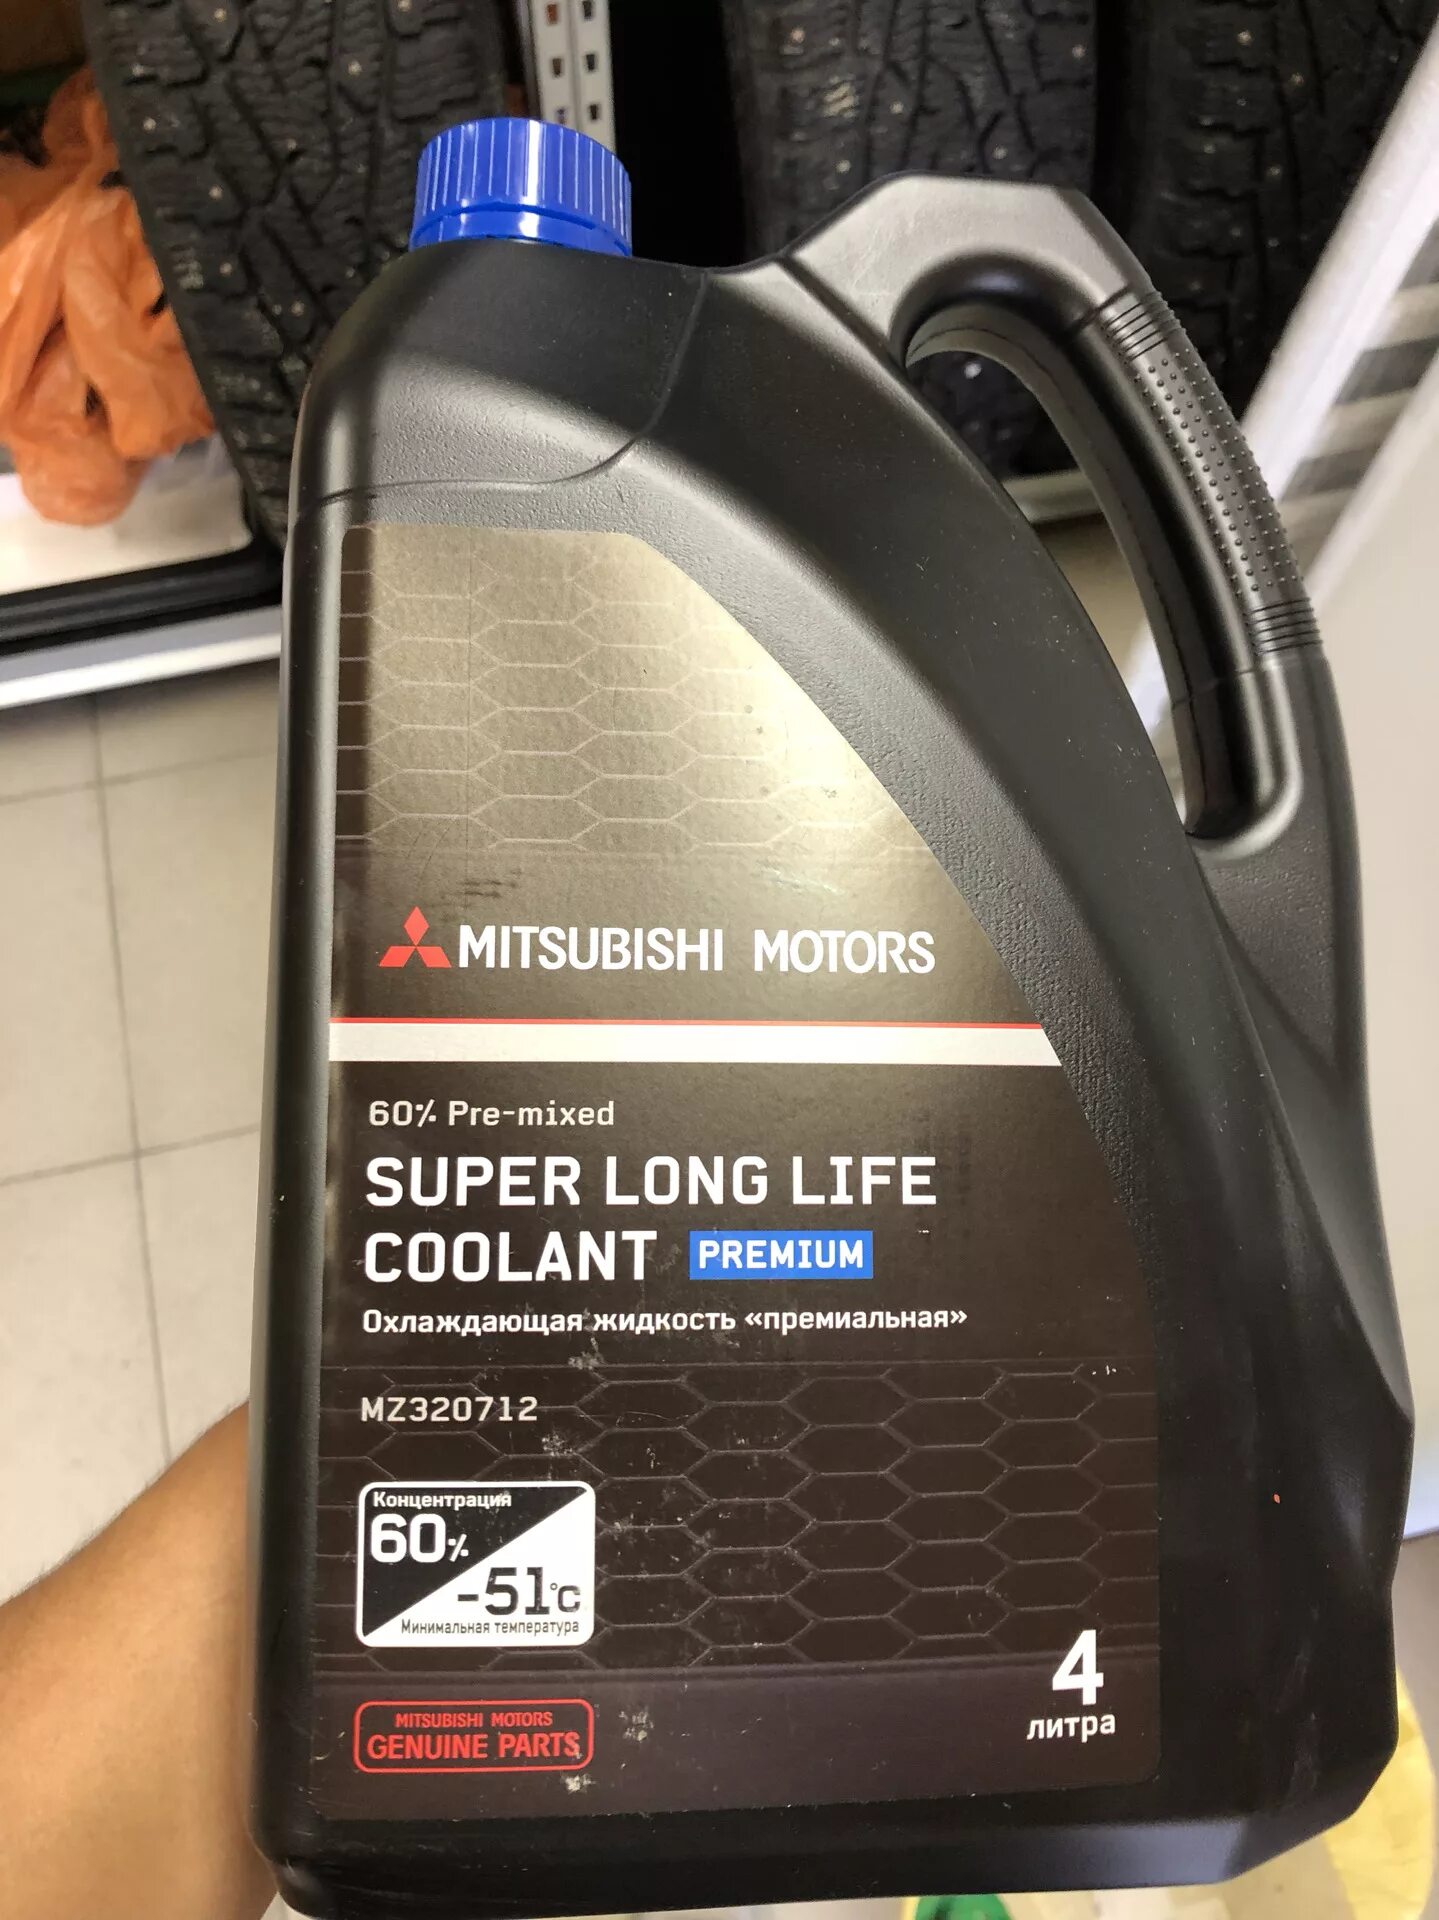 Mitsubishi coolant. Mitsubishi Motors super long Coolant Premium" mz320712. Mitsubishi mz320712 жидкость охлаждающая 4л., синяя. Mitsubishi super long Life Coolant Premium. Mitsubishi super long Life Coolant Premium mz320712.